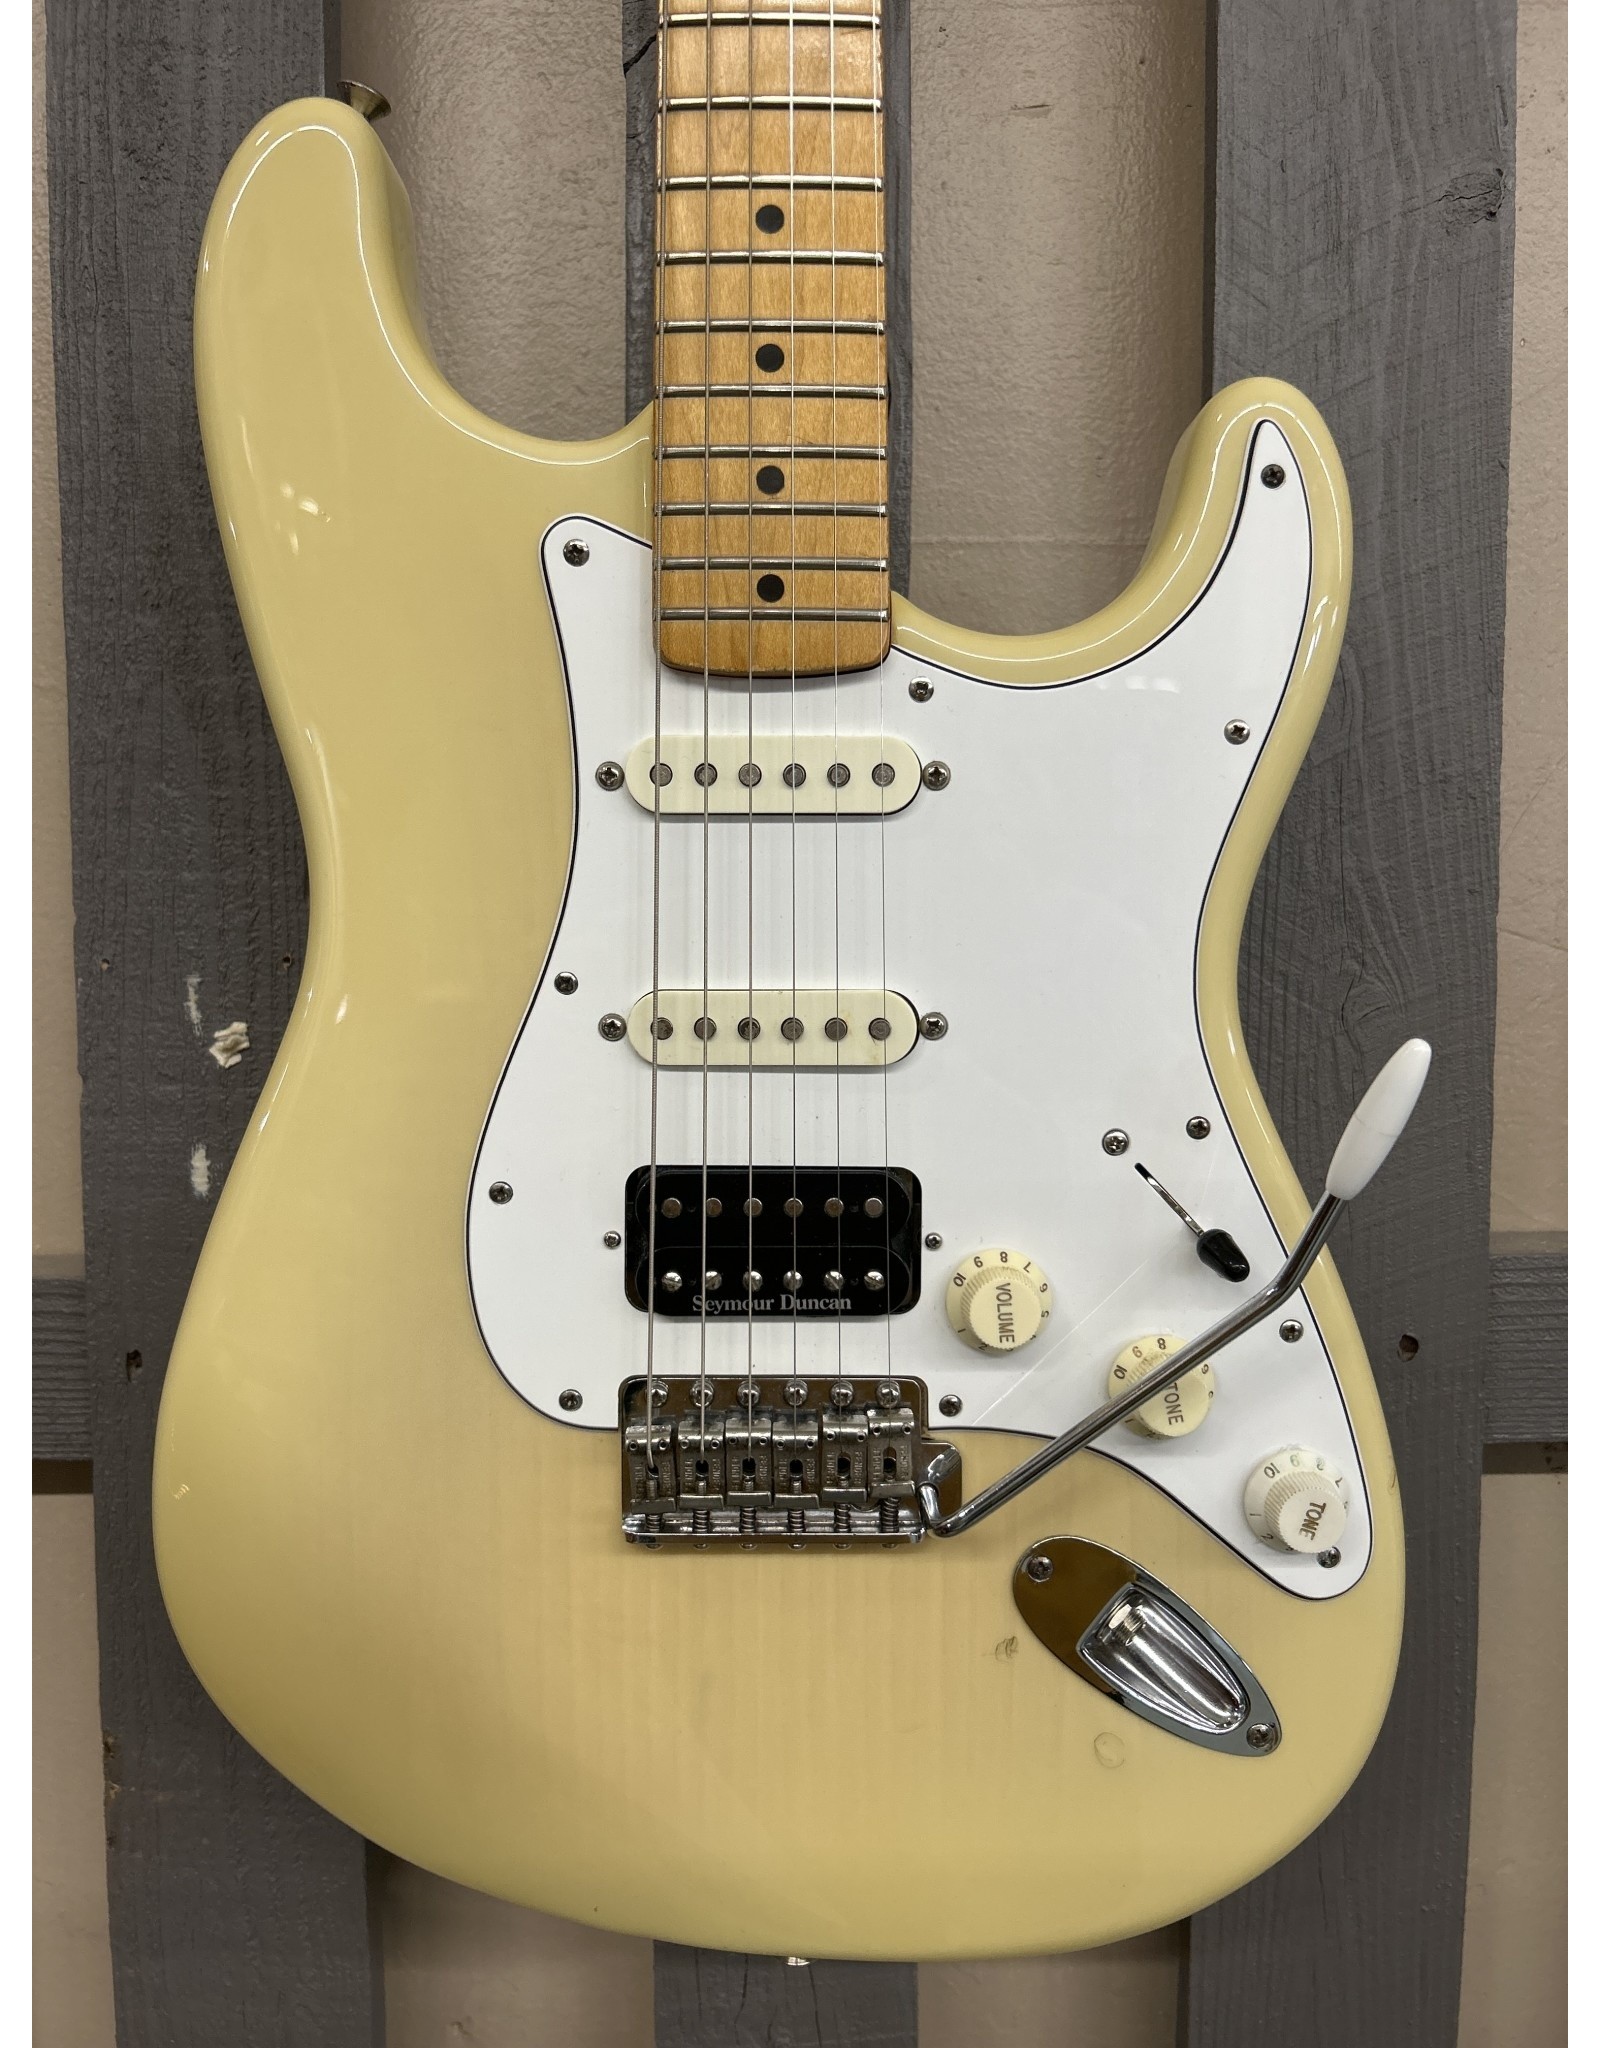 Fender Fender Stratocaster MIM 1995 W/Obsidian Wiring (Used)